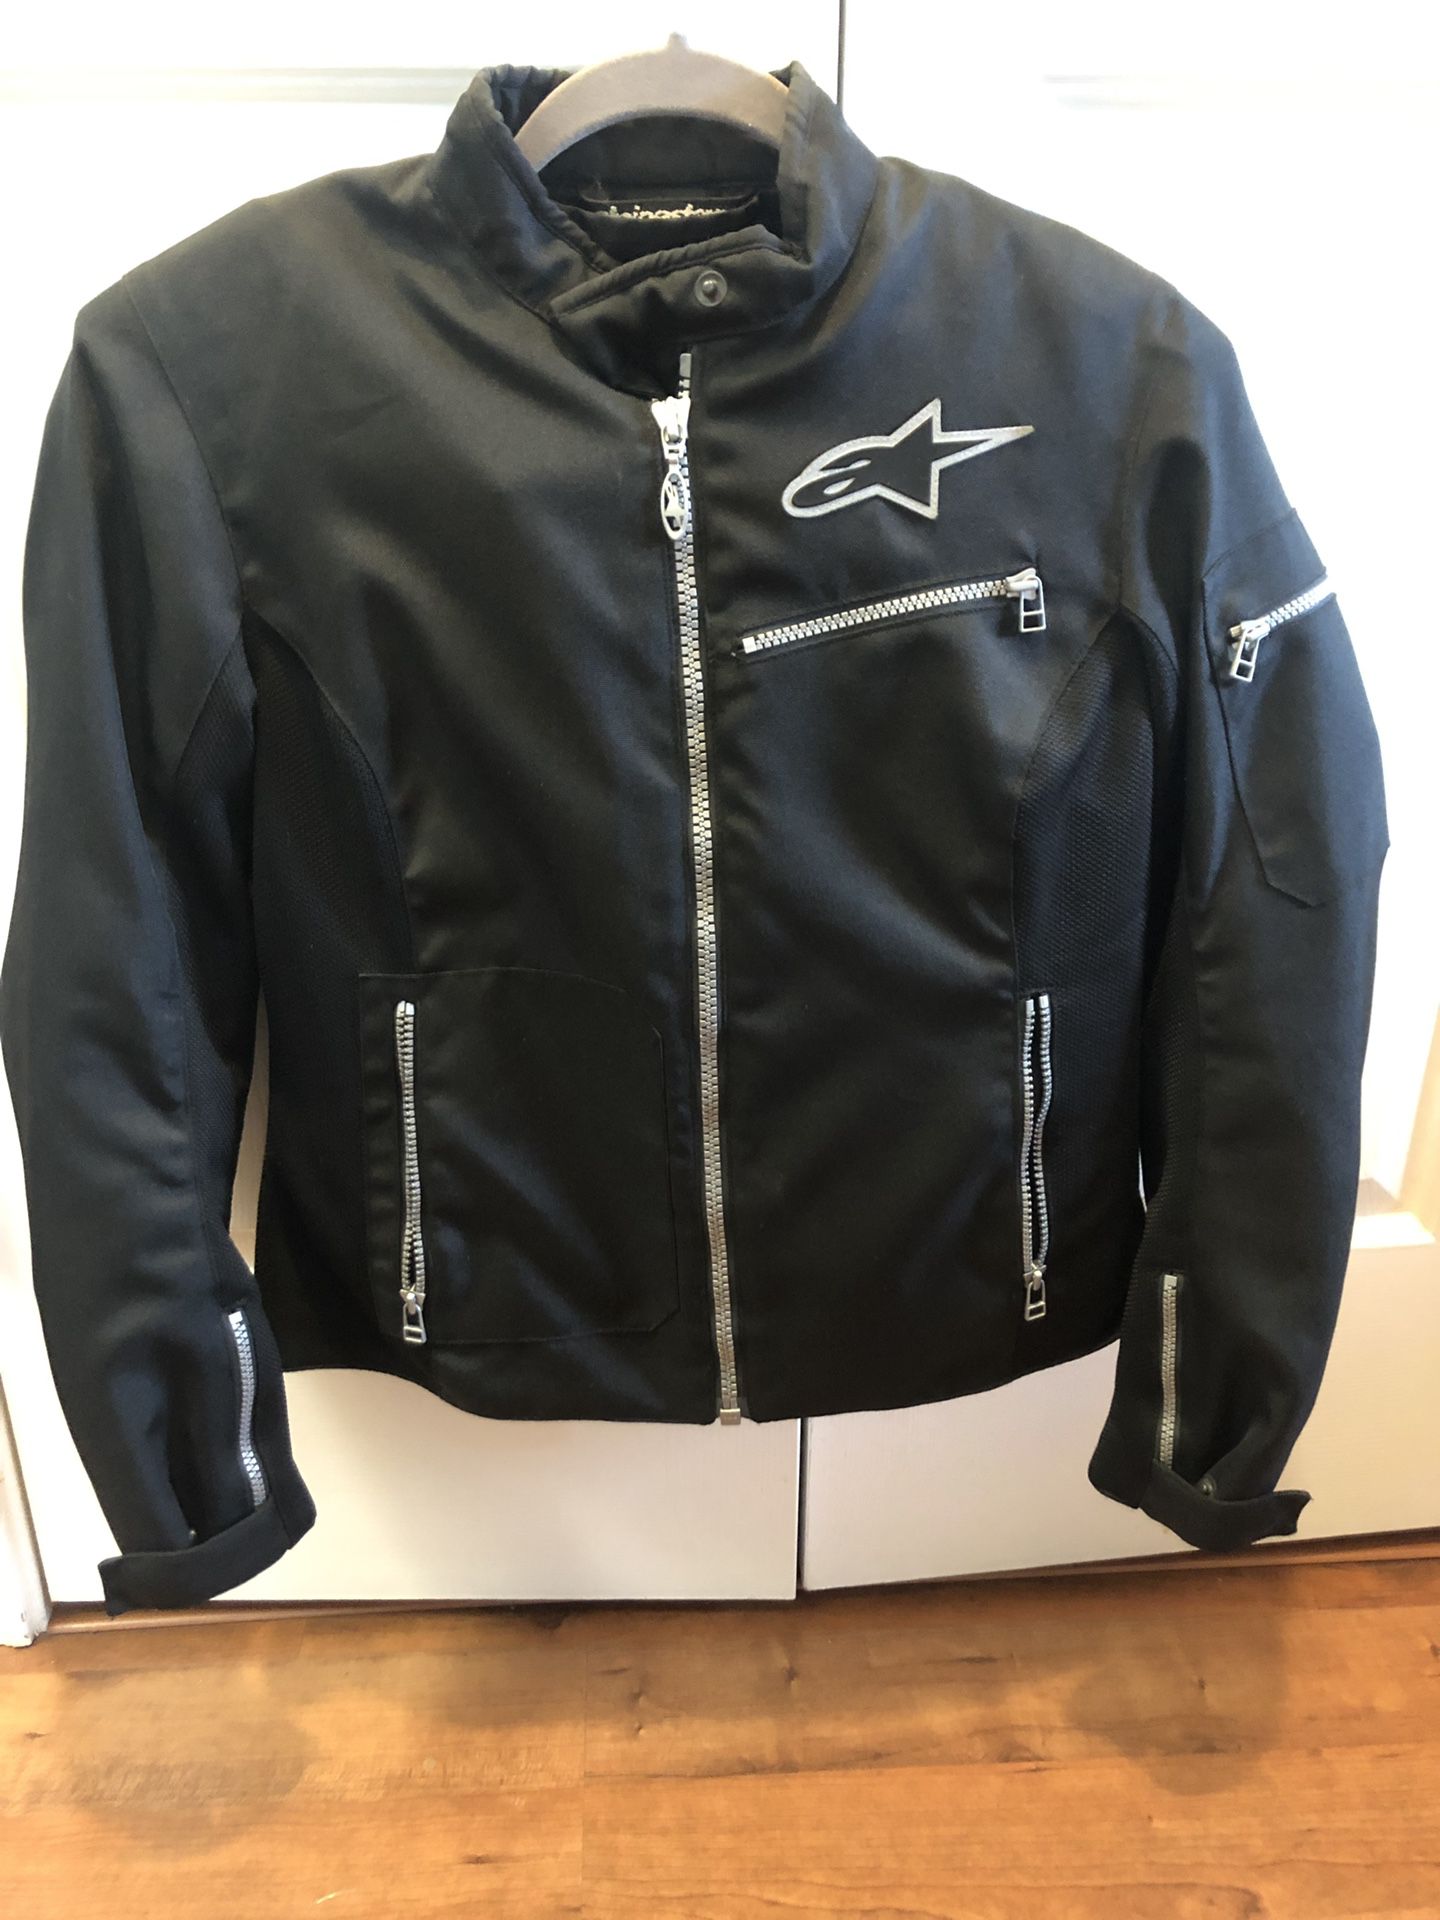 Alpine motorcycle jacket